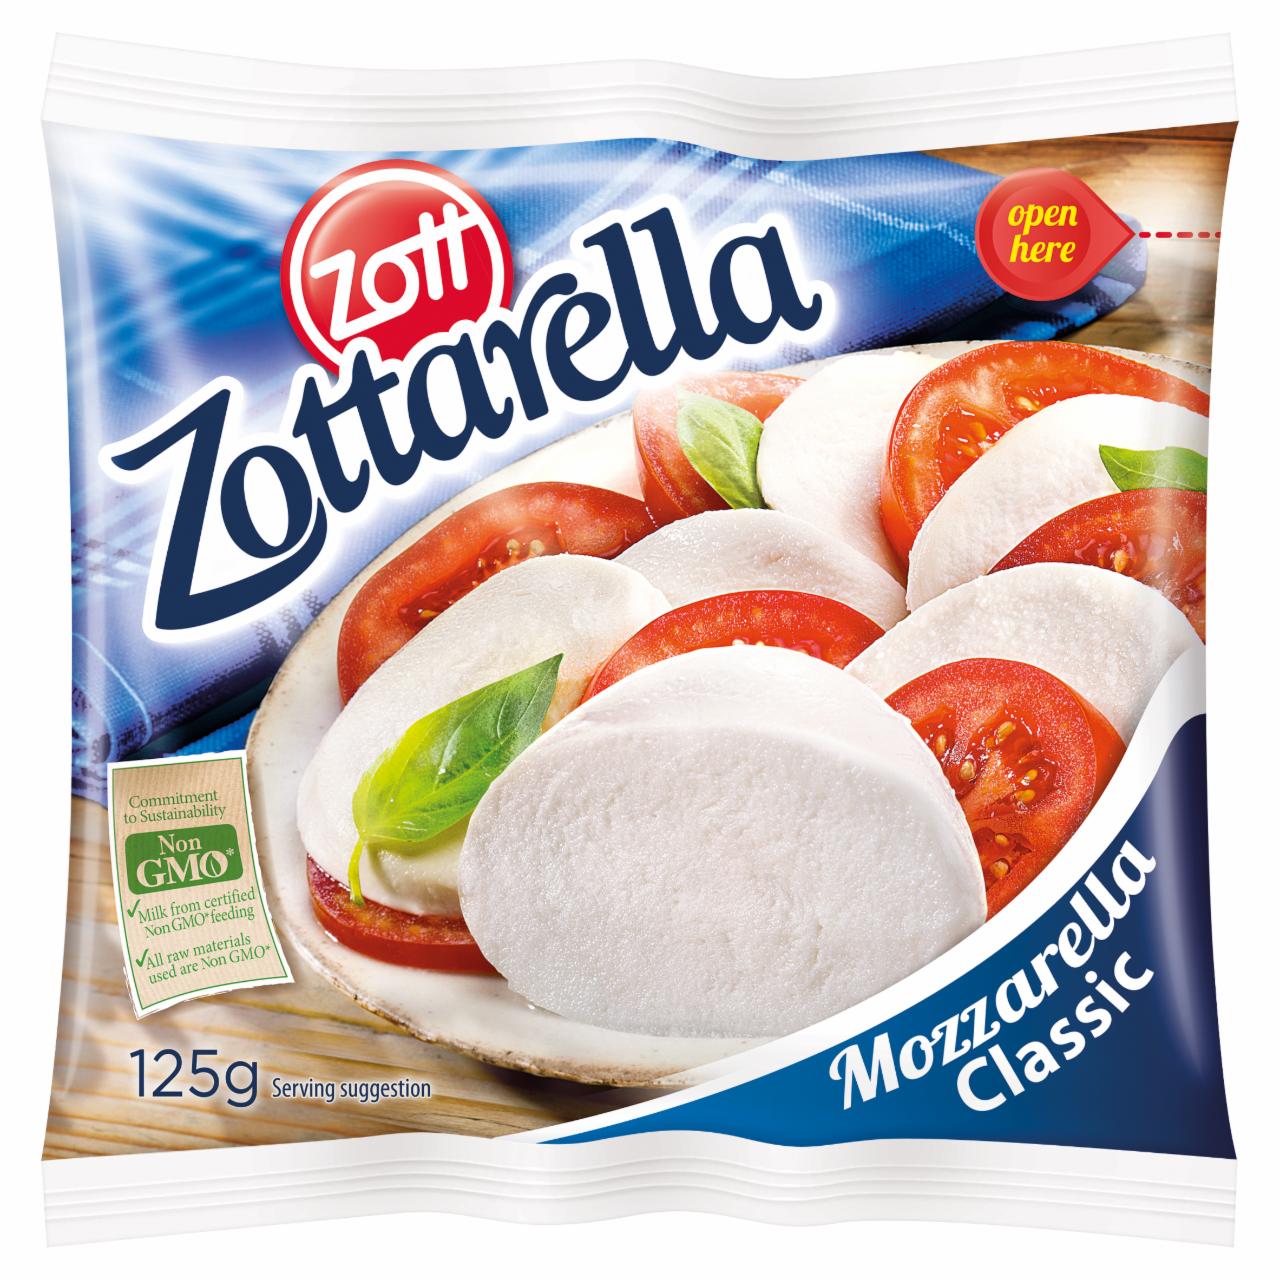 Zdjęcia - Zott Zottarella Classic Ser mozzarella 125 g